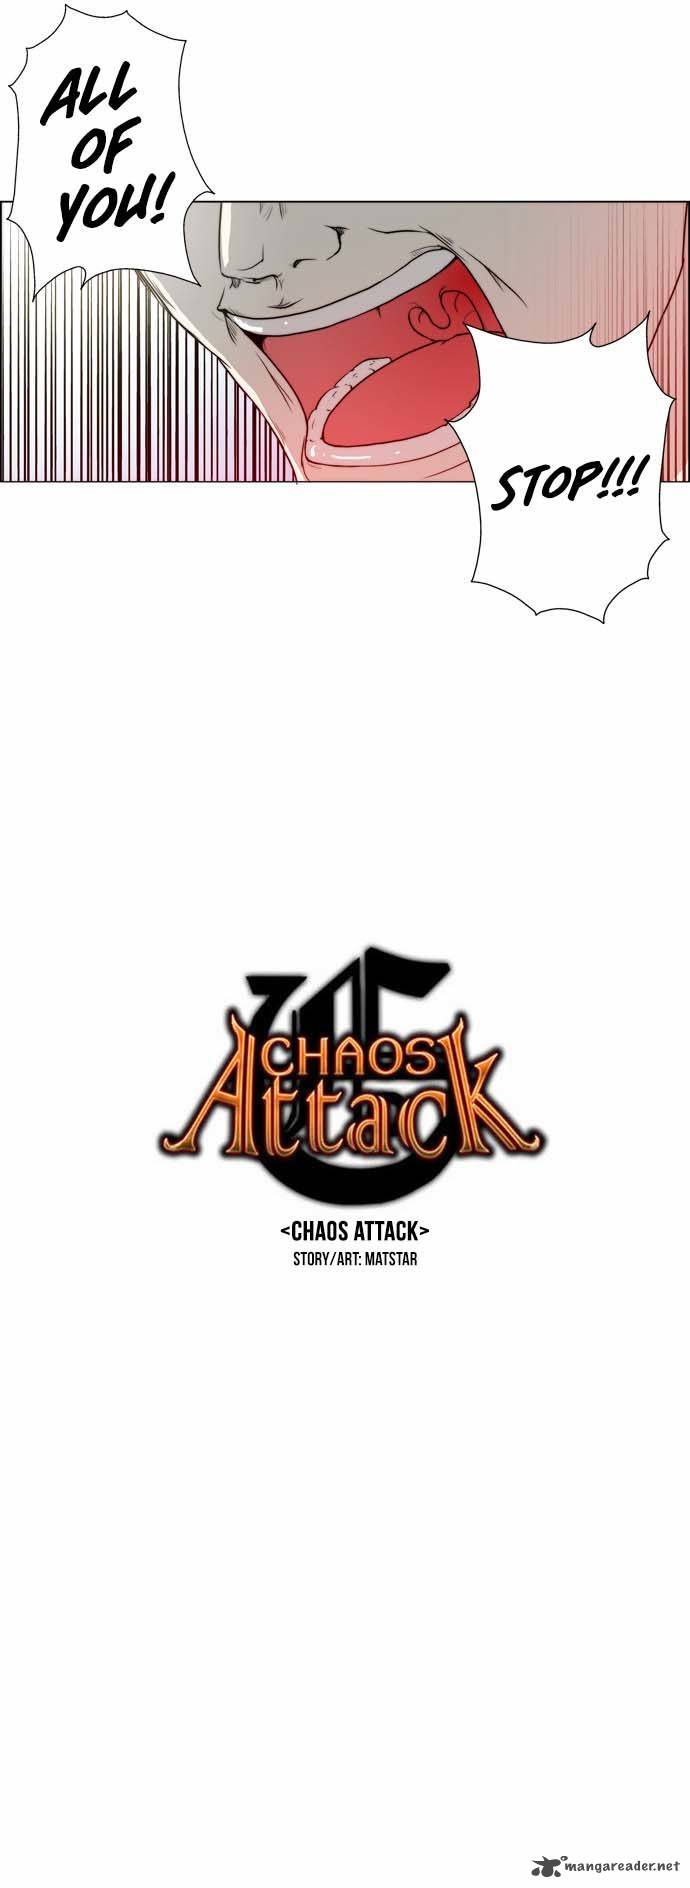 Chaos Attack 46 4